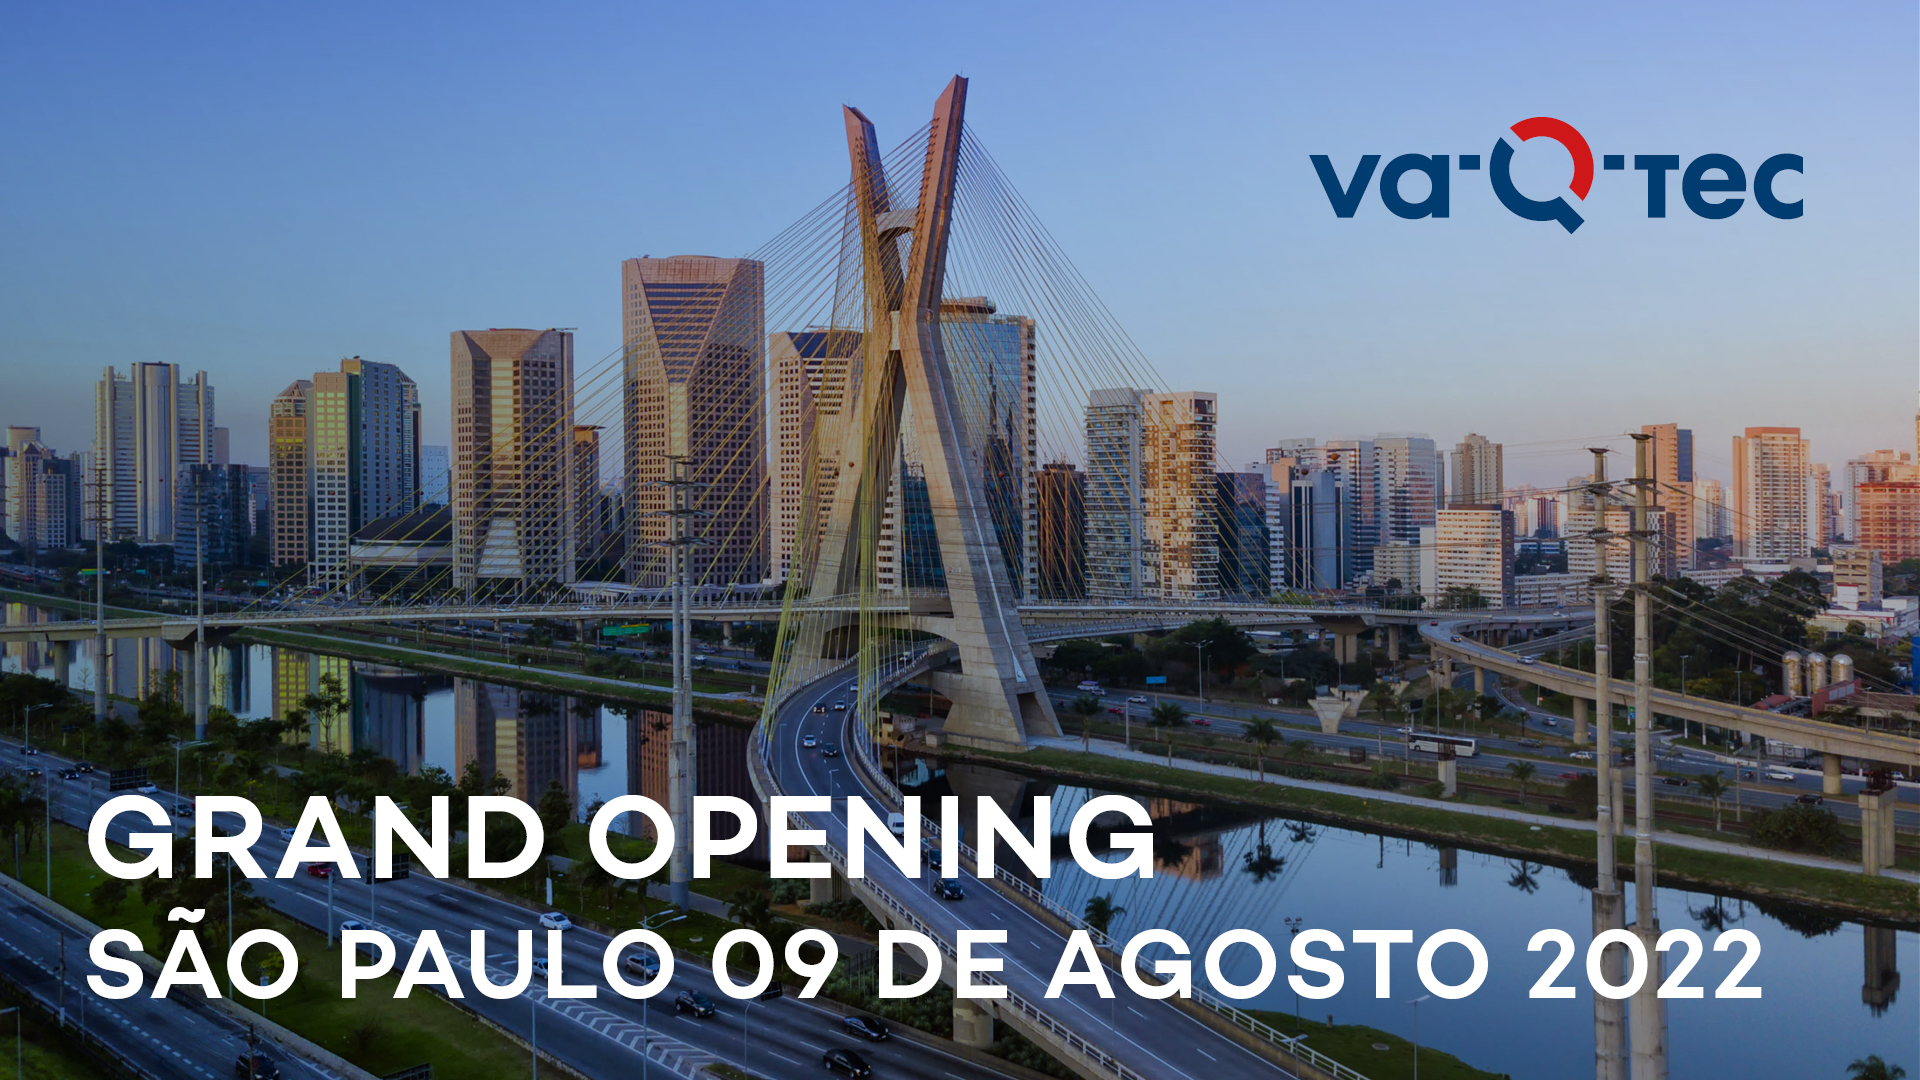 Grand Opening va-Q-tec do Brasil: Eröffnungsfeier des Standorts in São Paulo